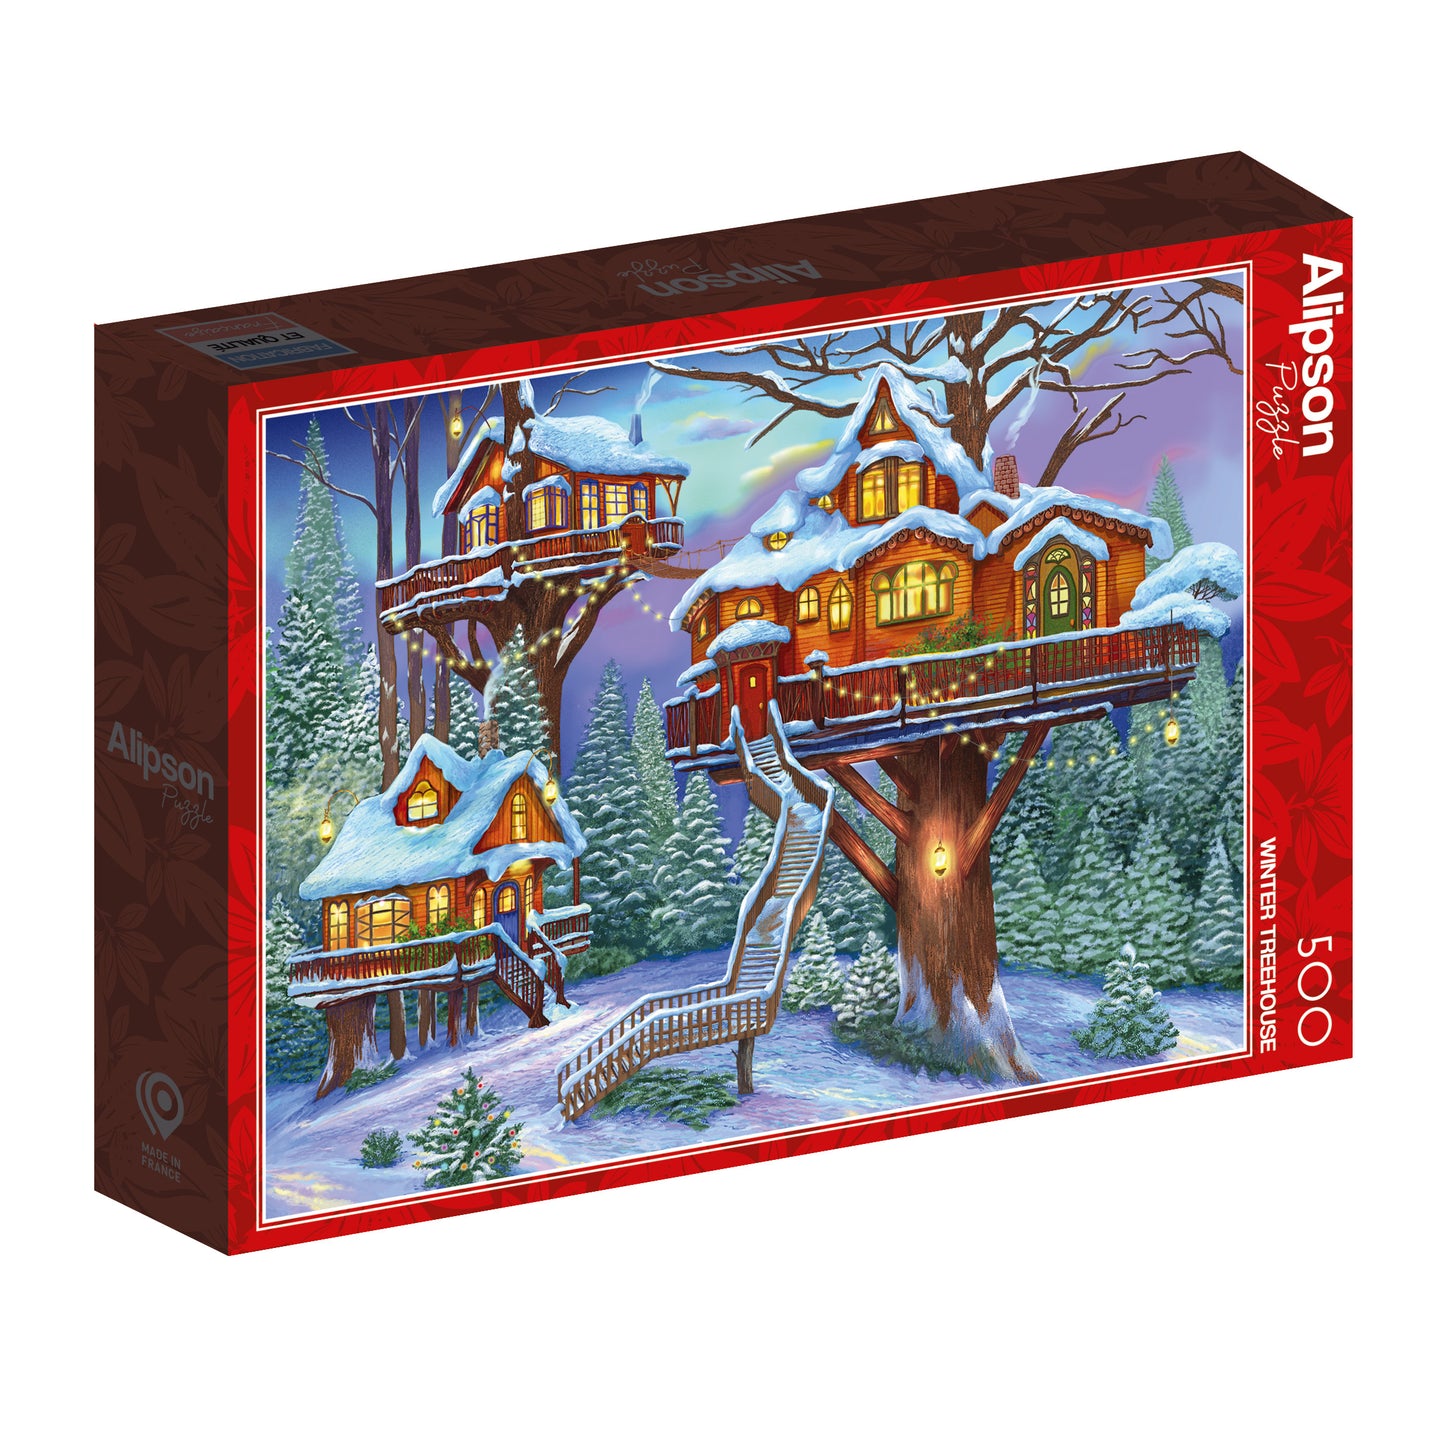 Alipson - Winter Treehouse - 500 Piece Jigsaw Puzzle